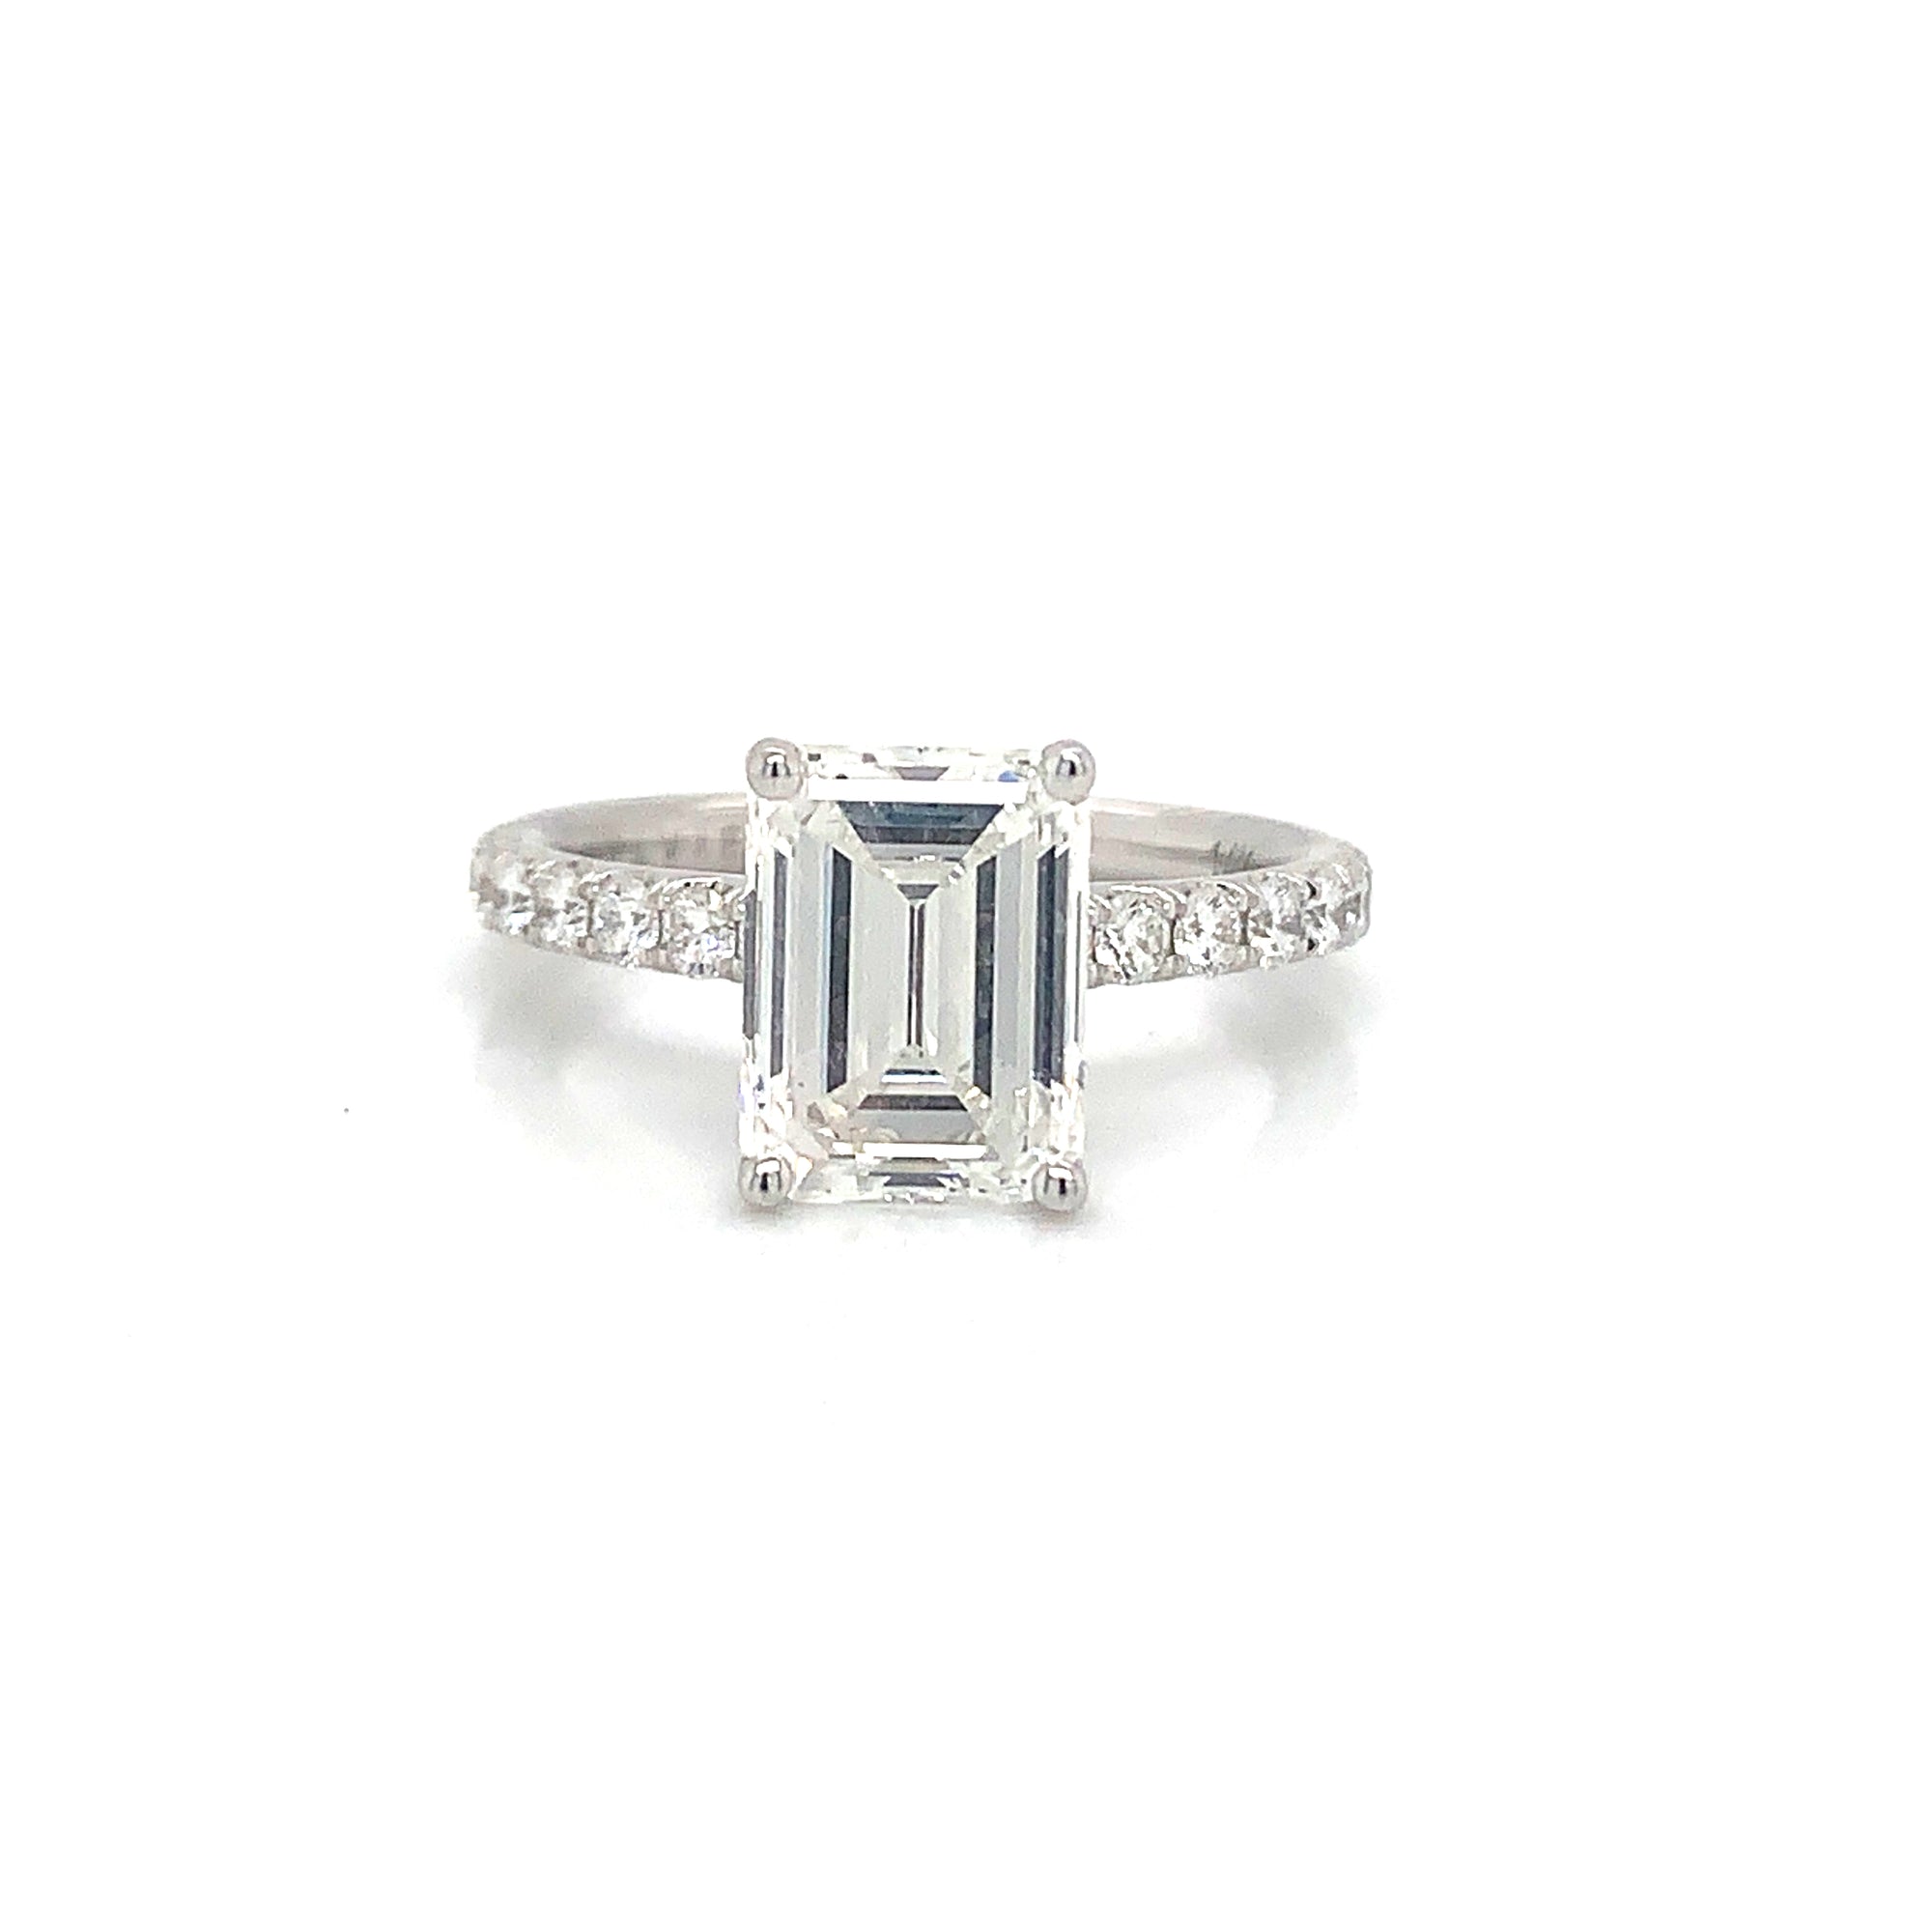 Sylvie 14K White Gold Emerald Cut Engagement Ring (2.49 Carat GIA Center Diamond)